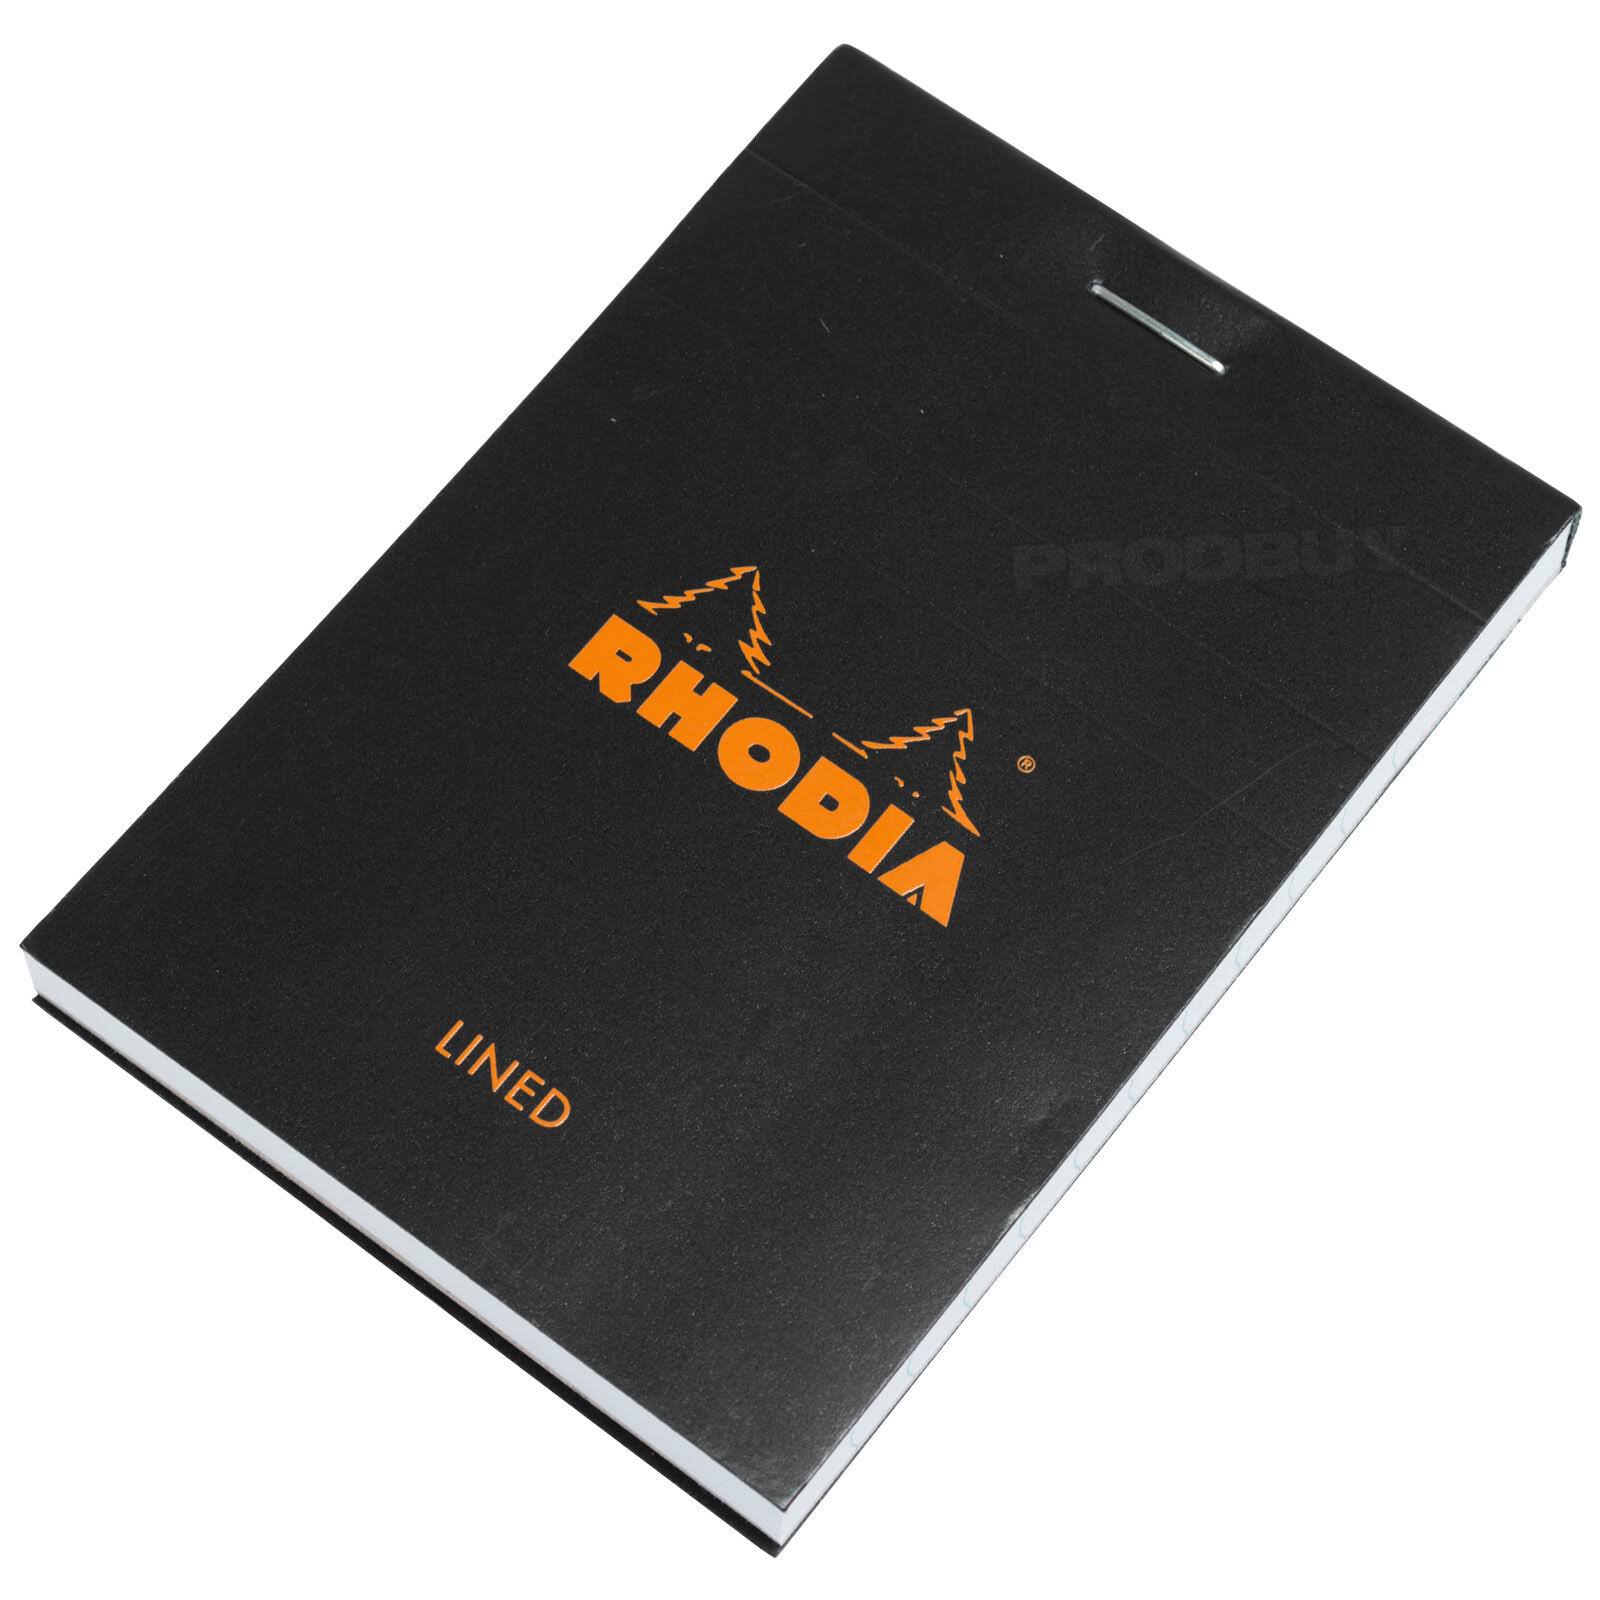 Rhodia Classic French Paper Pads - 3"x4", Black